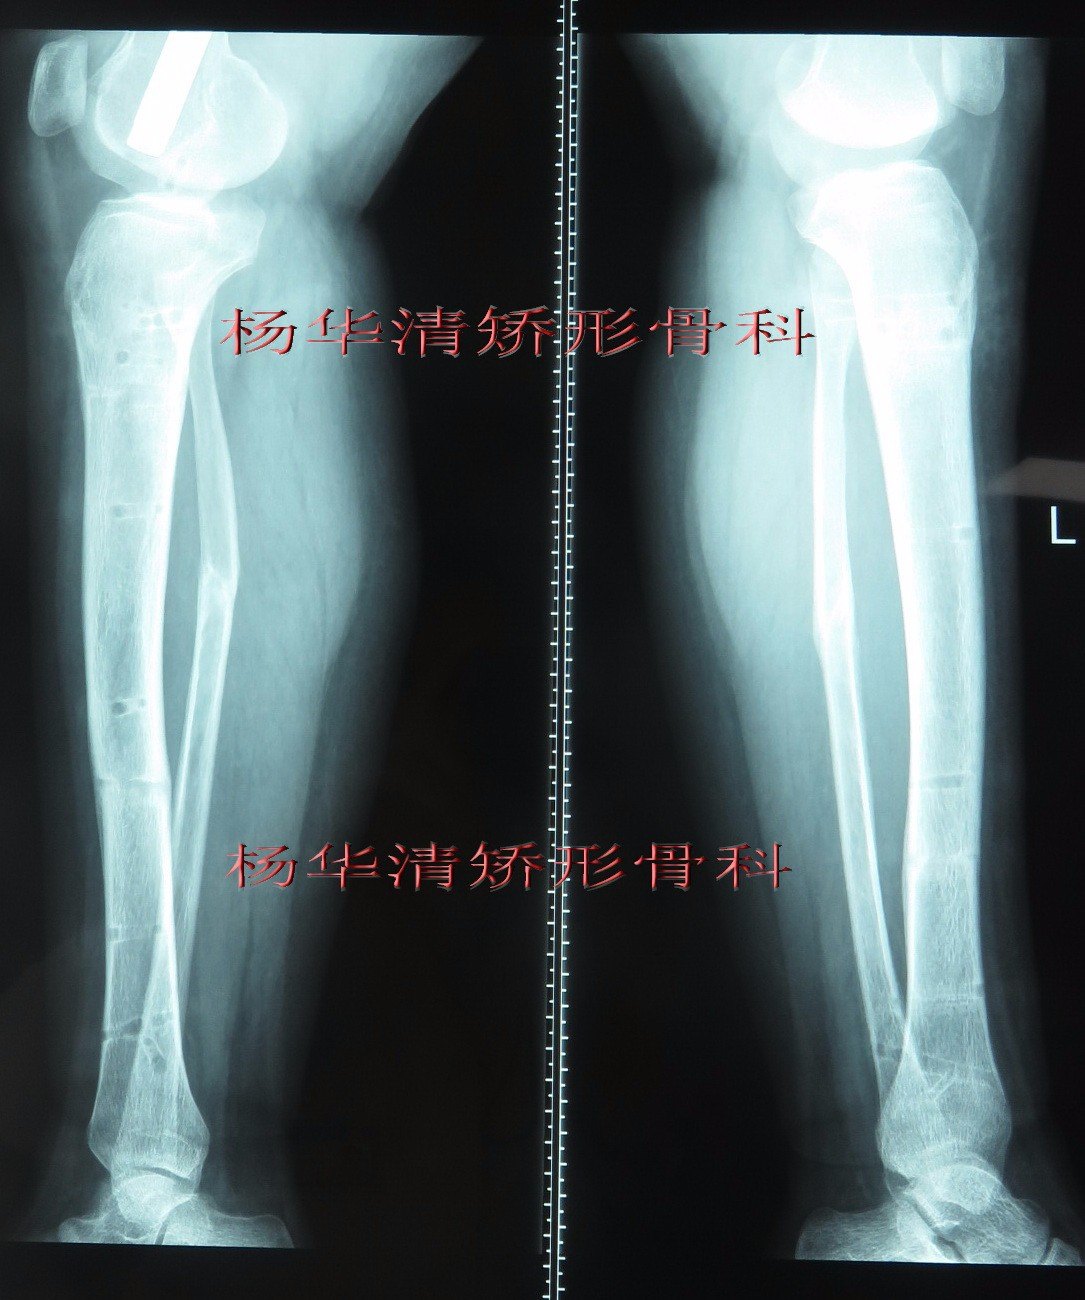 o型腿o形腿重度膝内翻病例杨华清矫形骨科